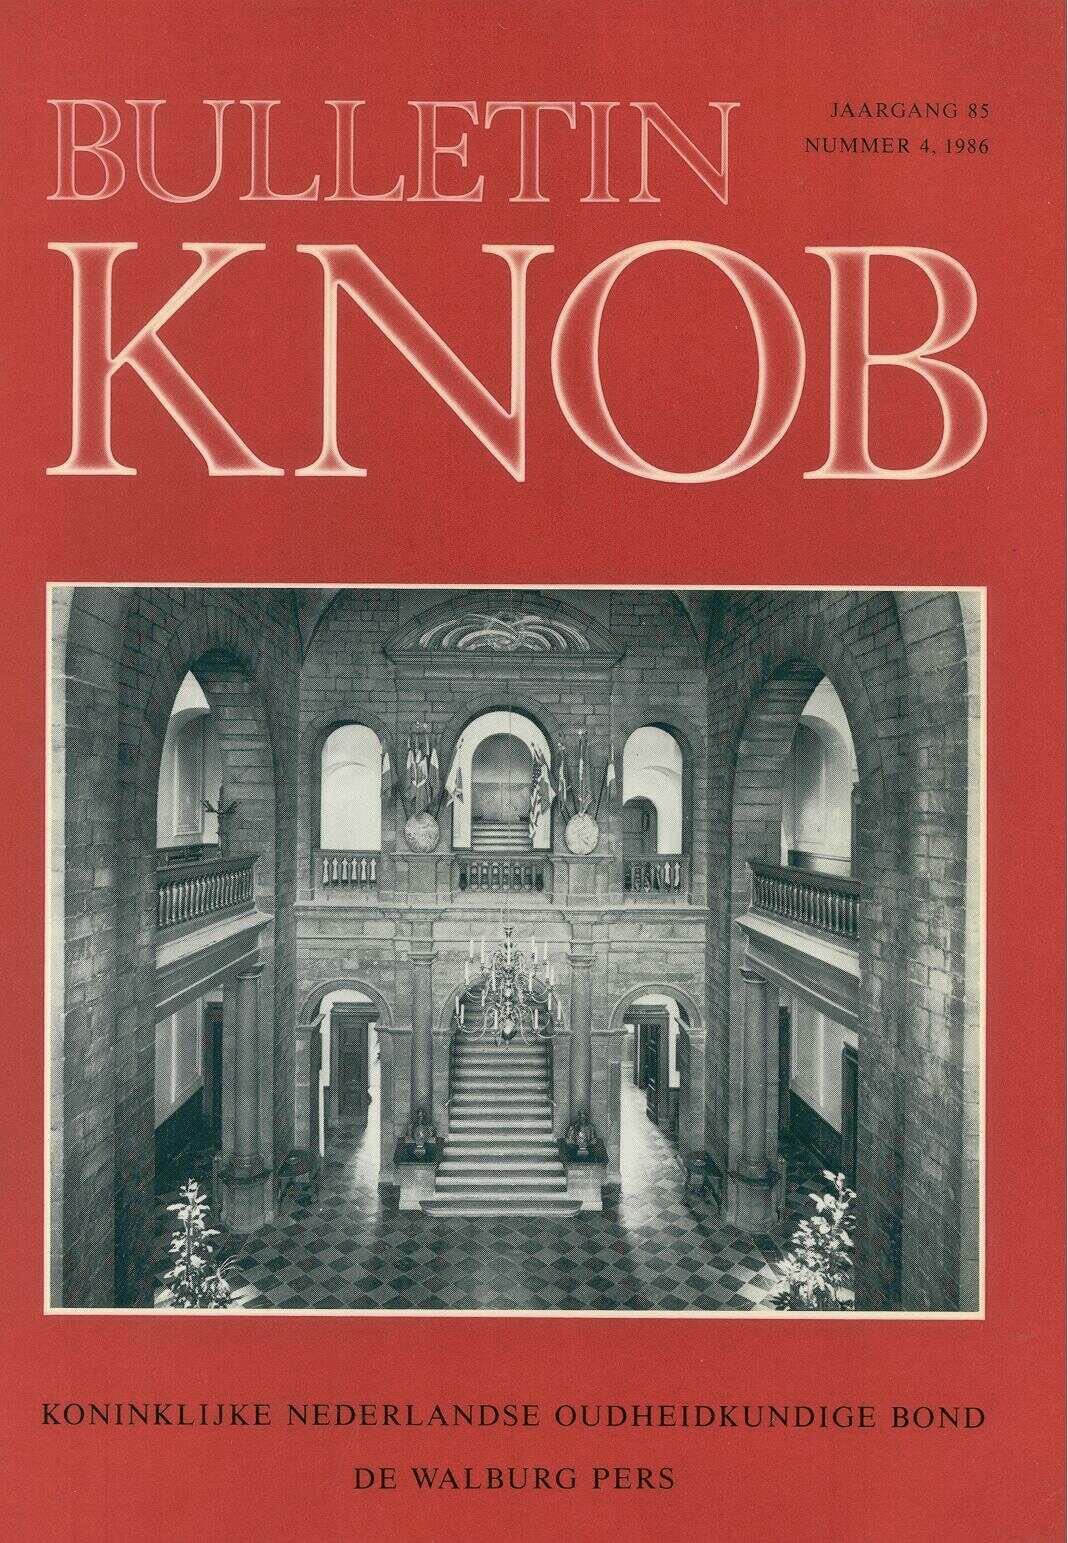 						Toon Bulletin KNOB 85 (1986) 4
					